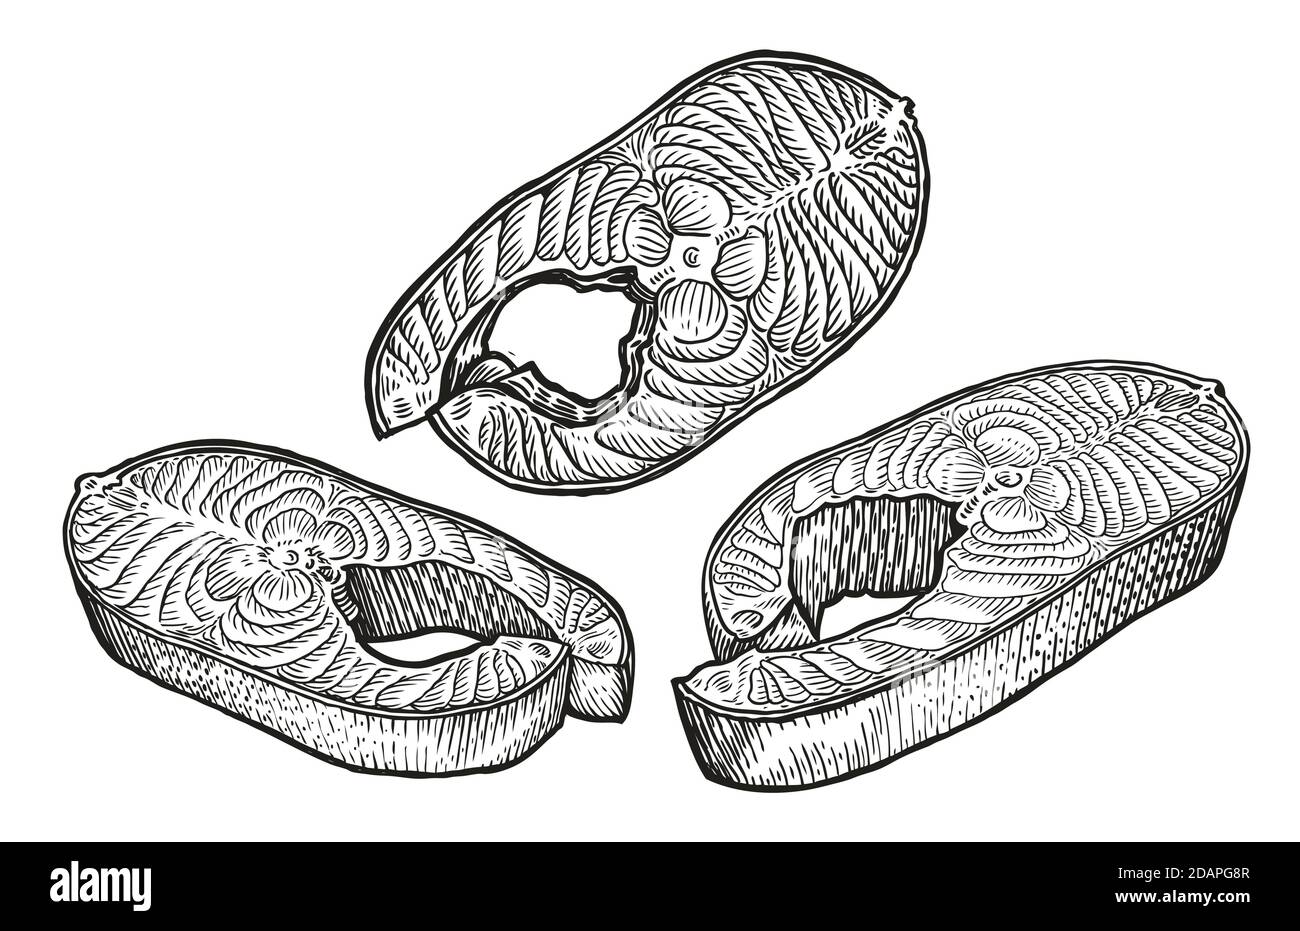 Fish steak sketch. Meat, food concept vector illustration Stock Vector